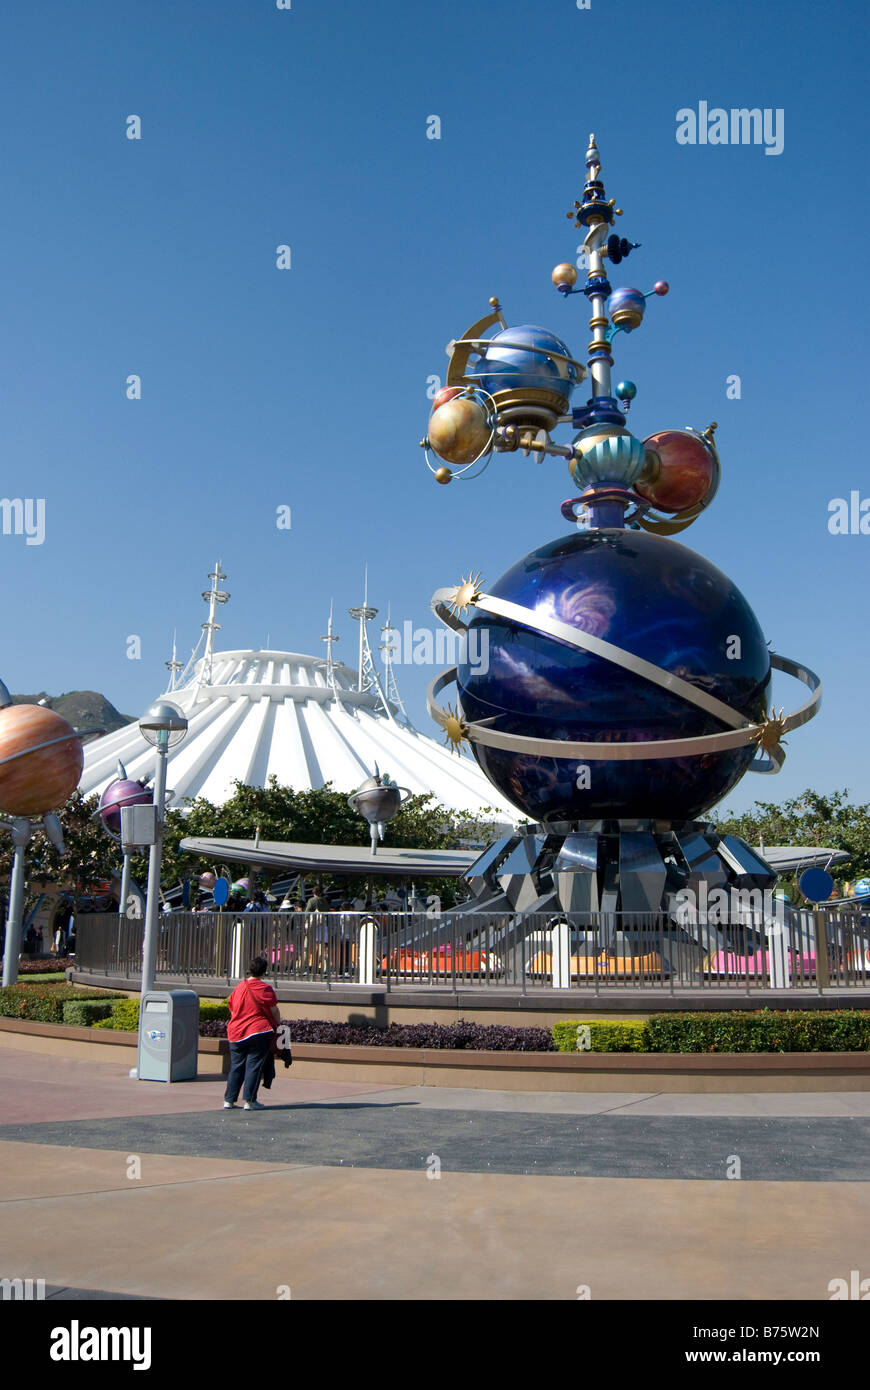 Orbitron ride, Tomorrowland, Hong Kong Disneyland Resort, l'Isola di Lantau, Hong Kong, Repubblica Popolare di Cina Foto Stock